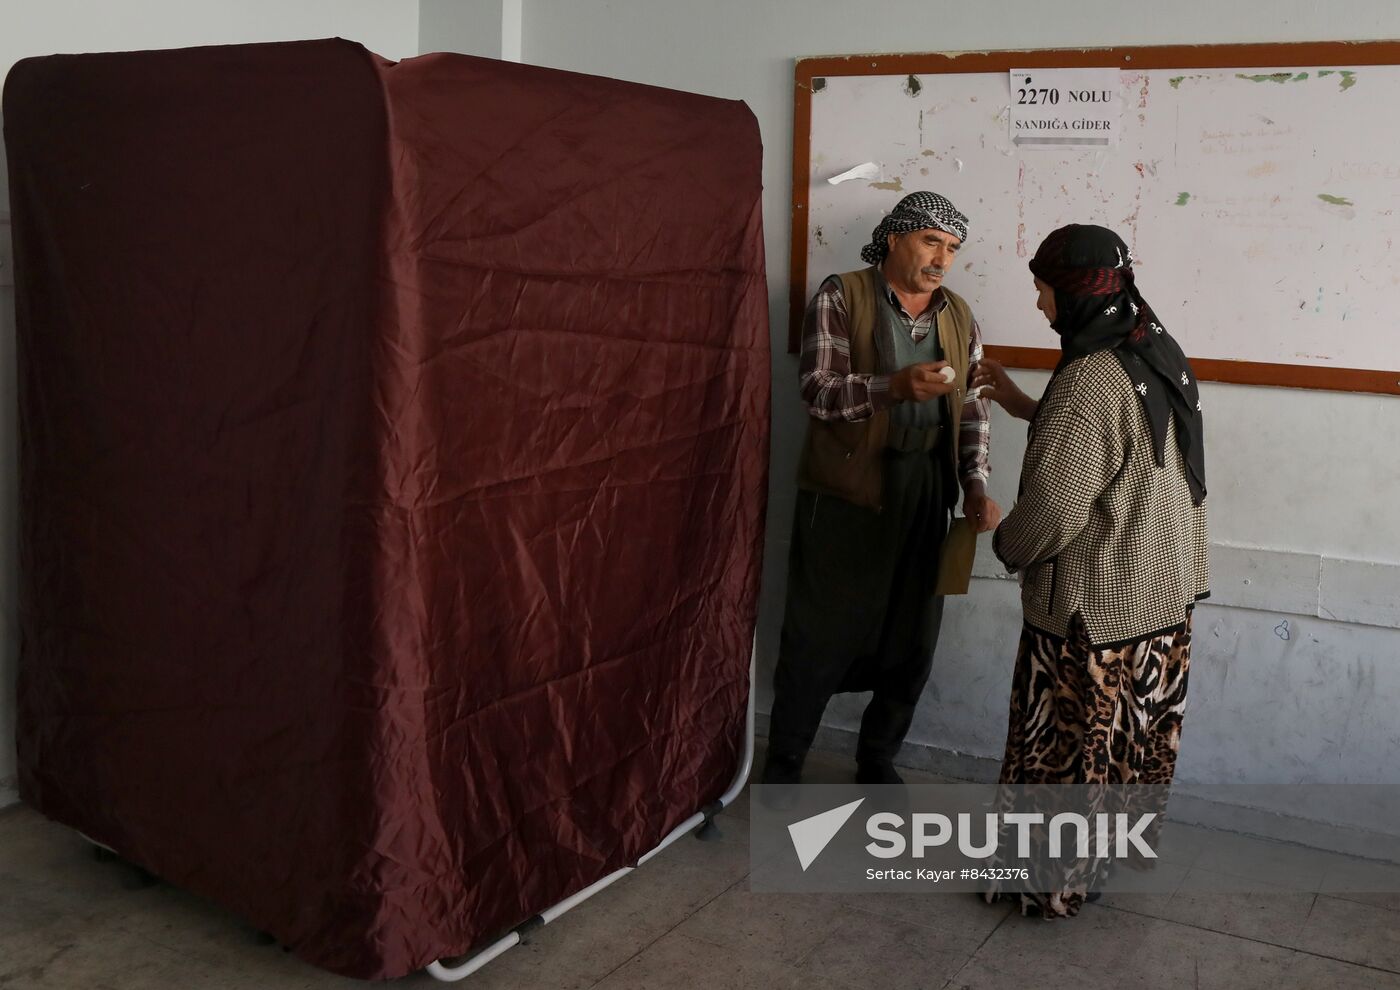 Turkey Election